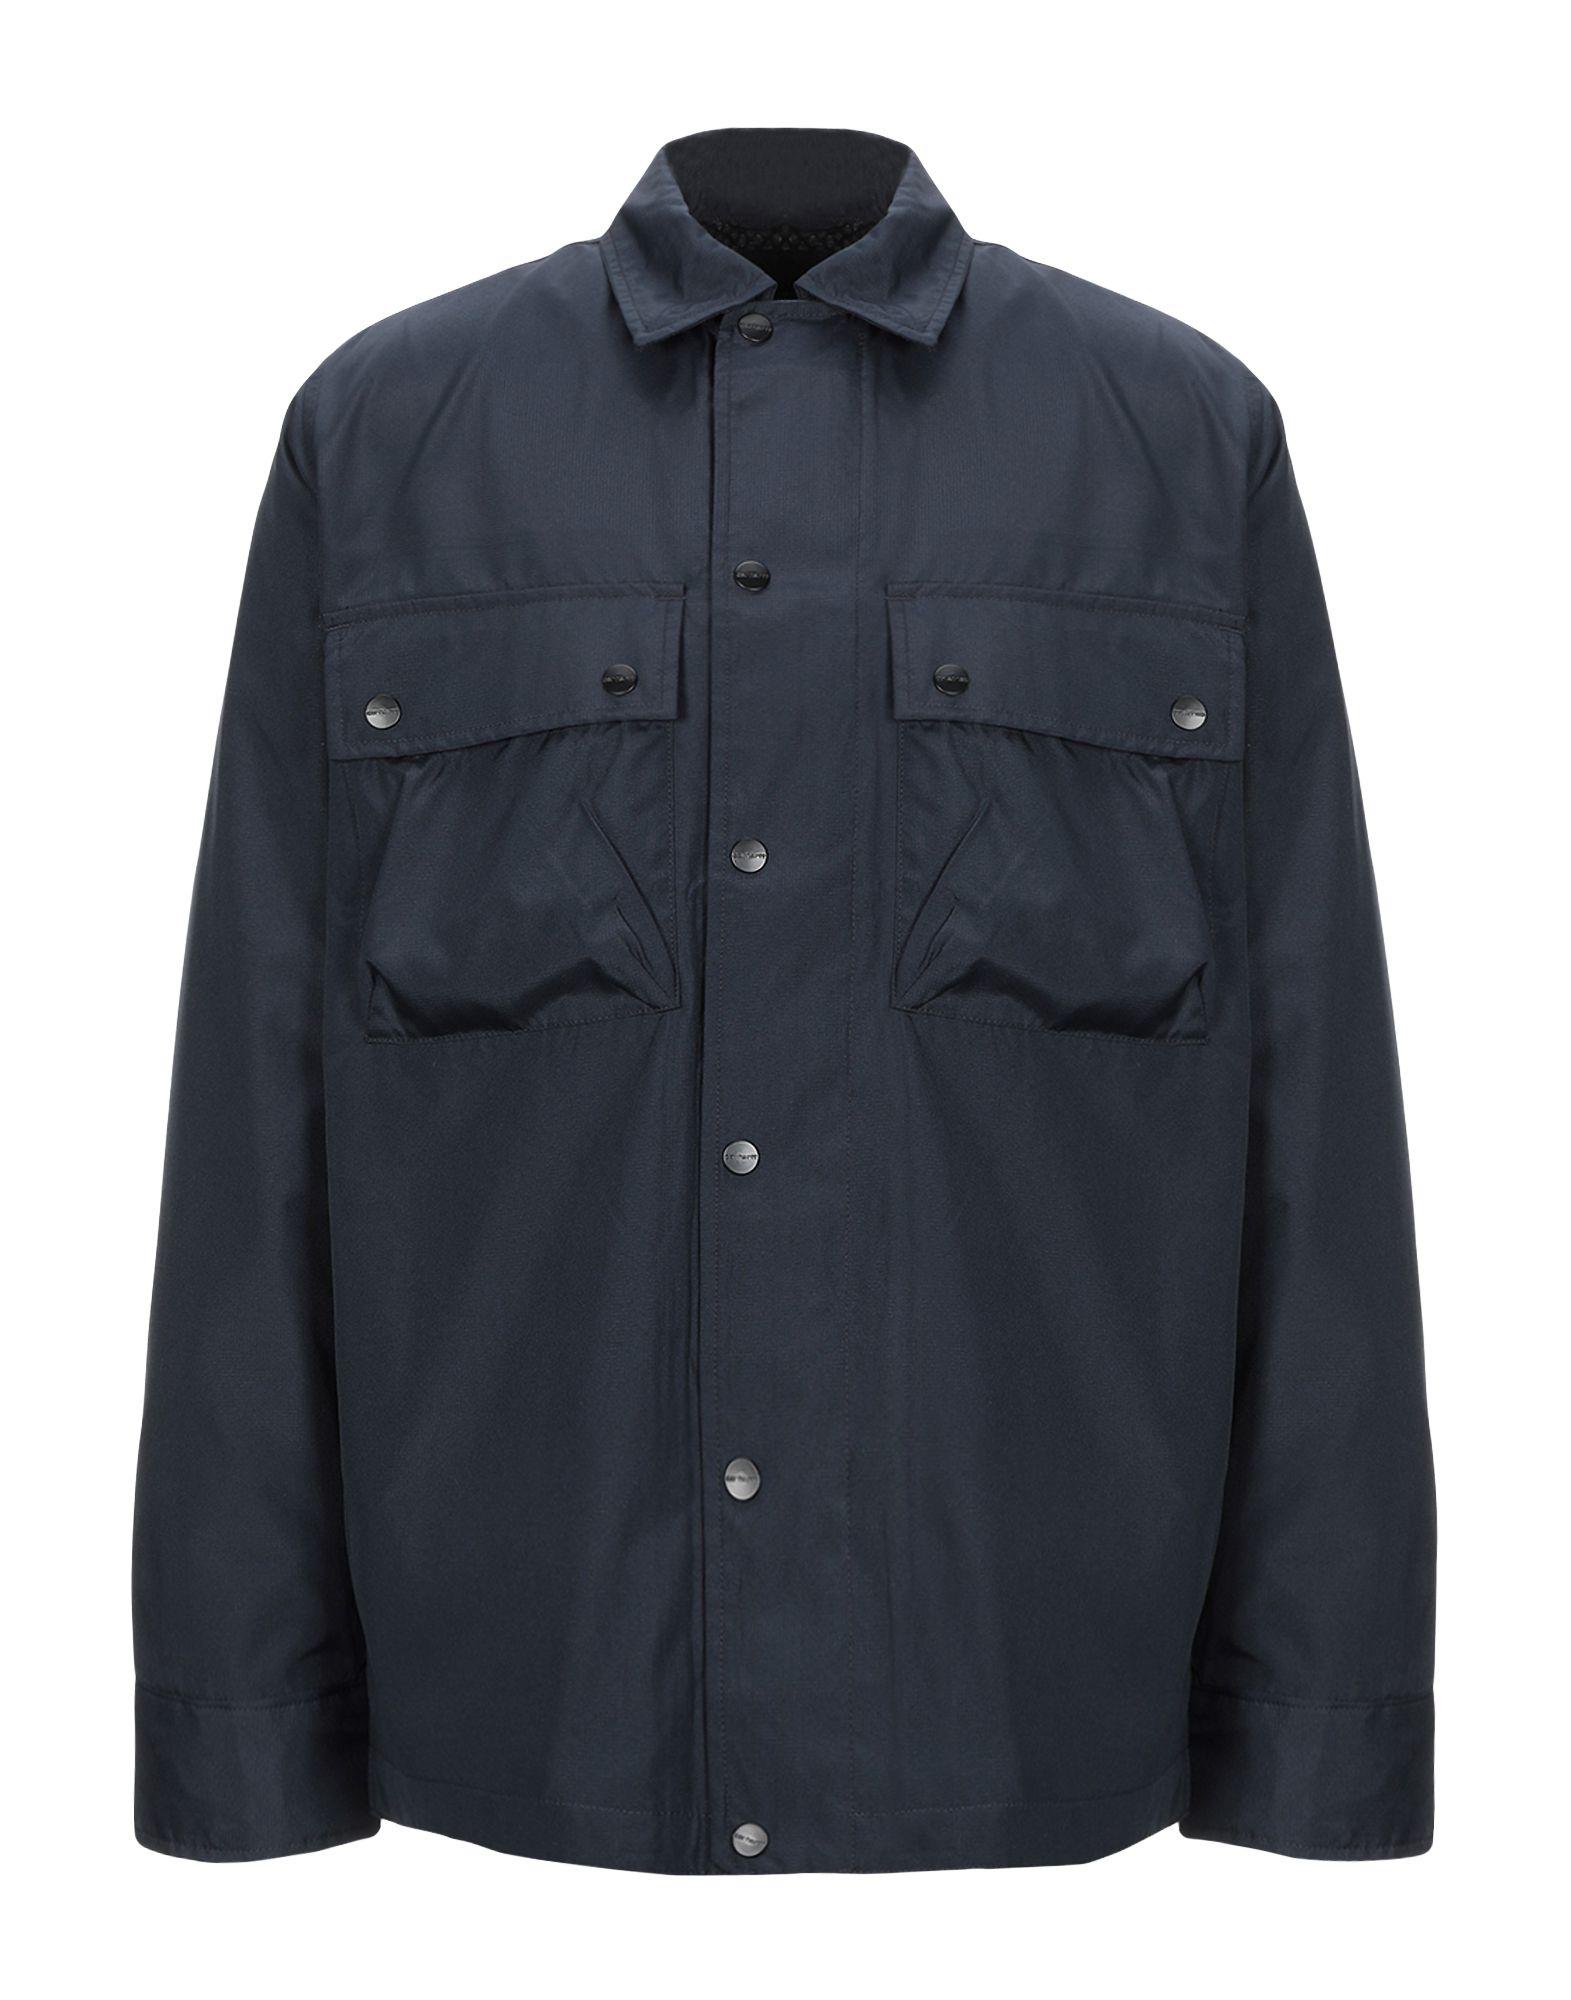 Carhartt Synthetic Jacket in Dark Blue (Blue) for Men - Lyst